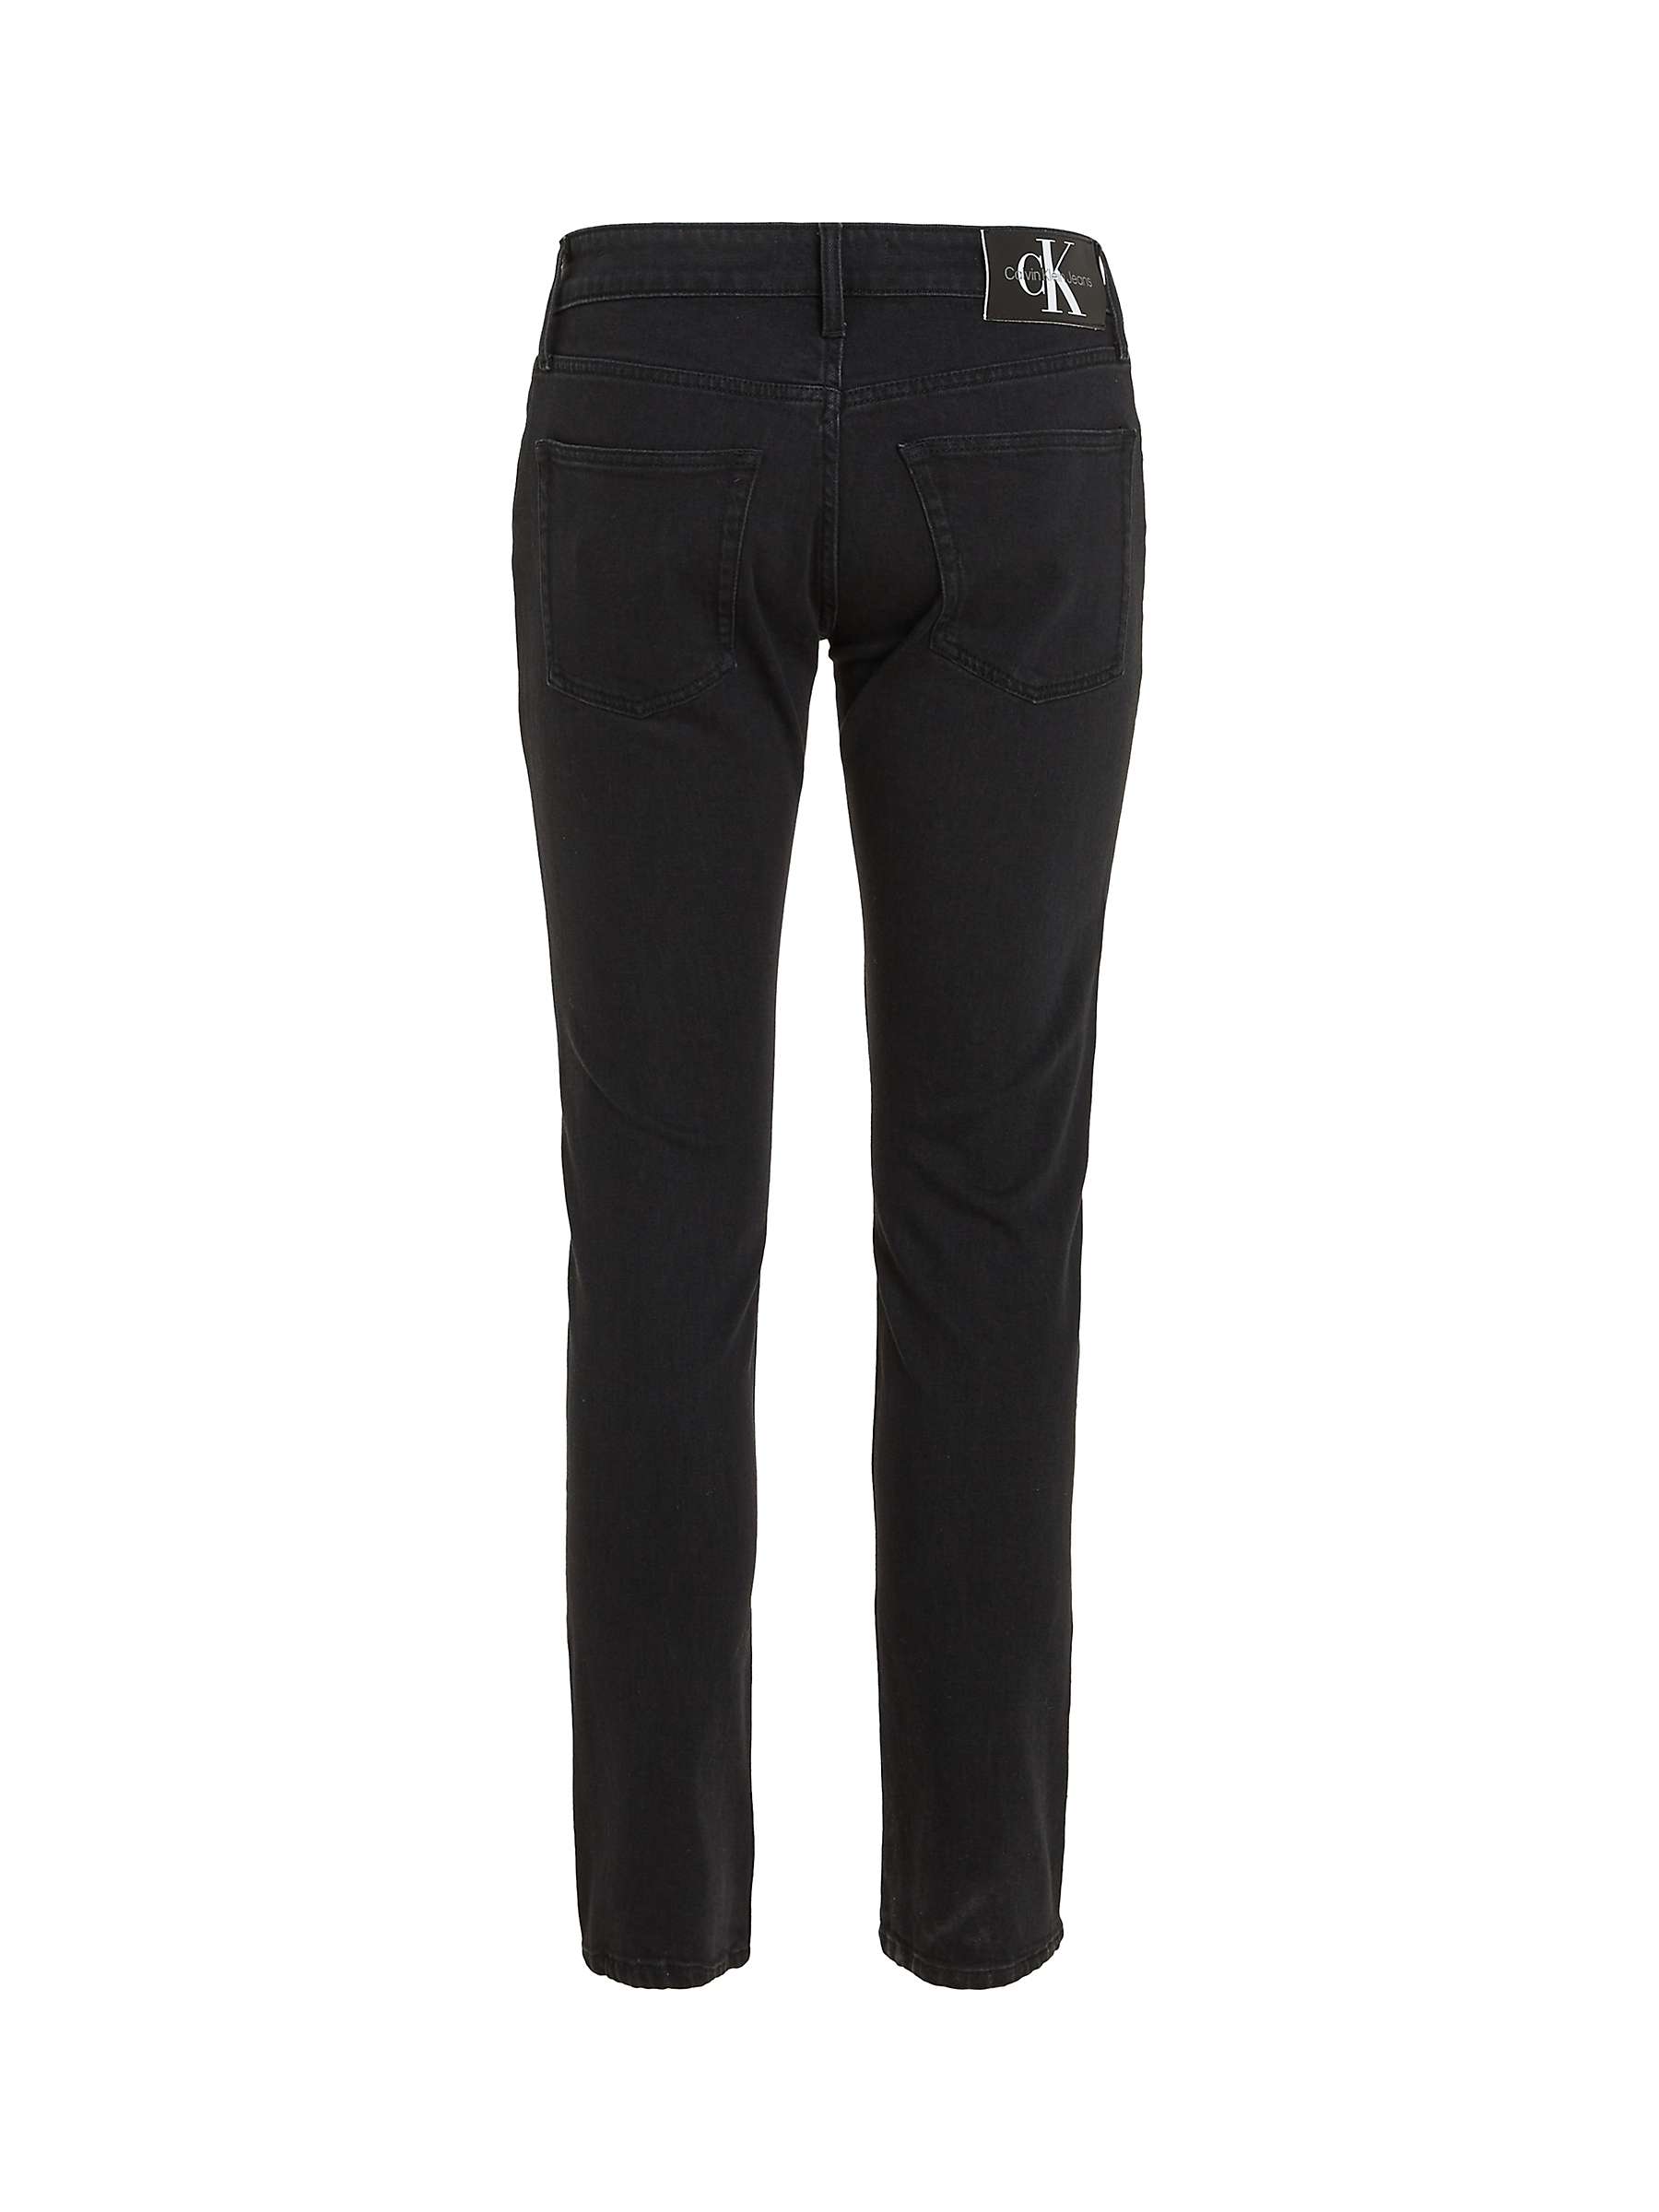 Buy Calvin Klein Slim Fit Jeans Online at johnlewis.com